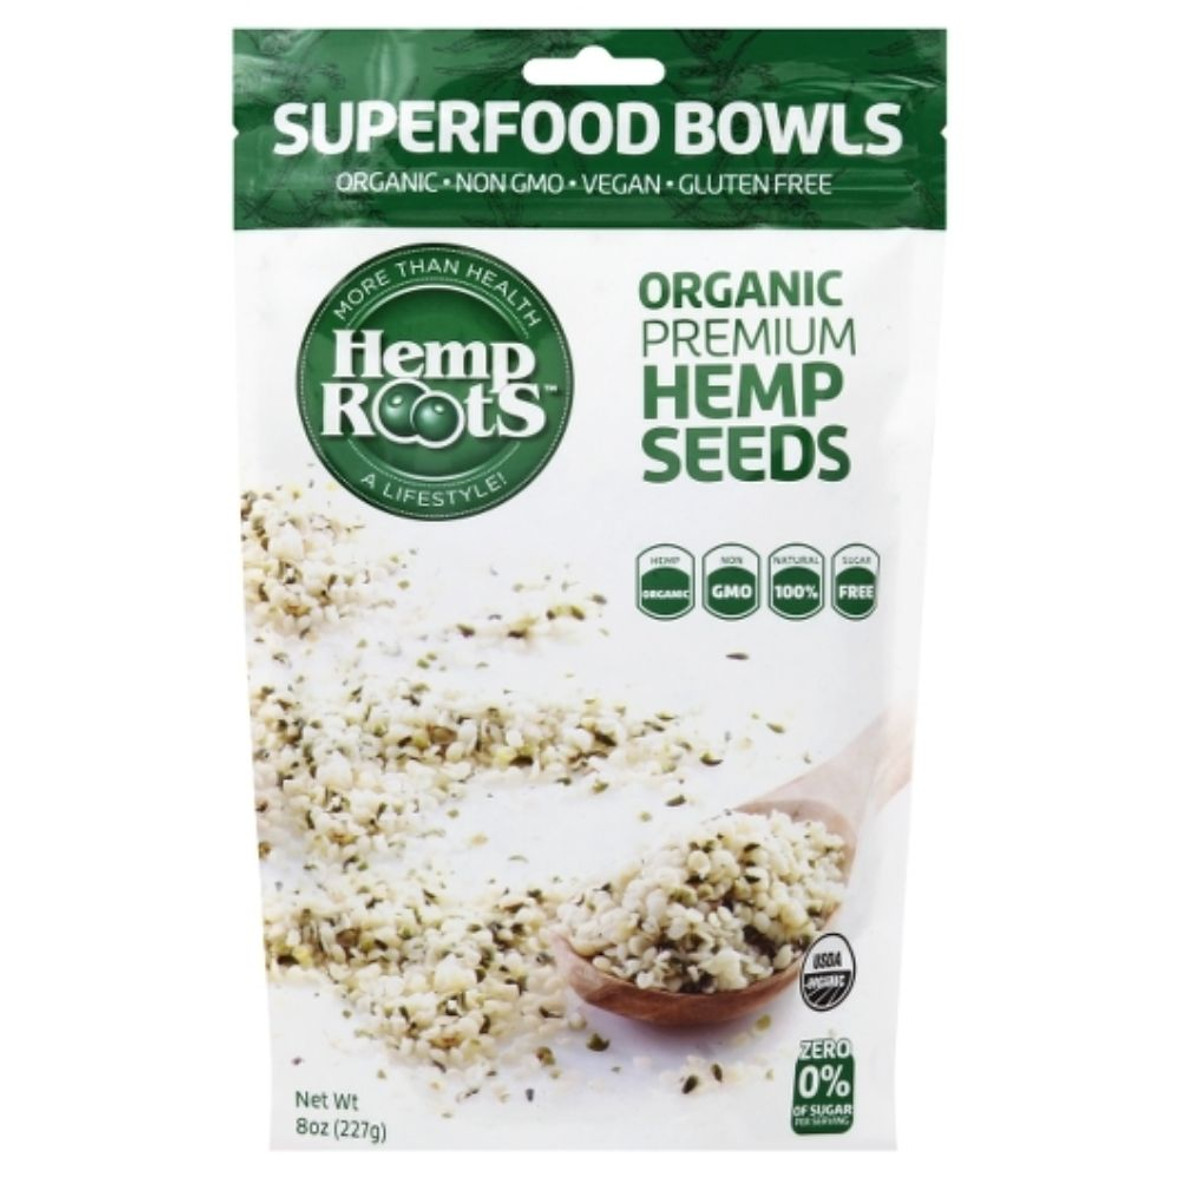 Superfood Bowls organic Premium Hemp Seeds